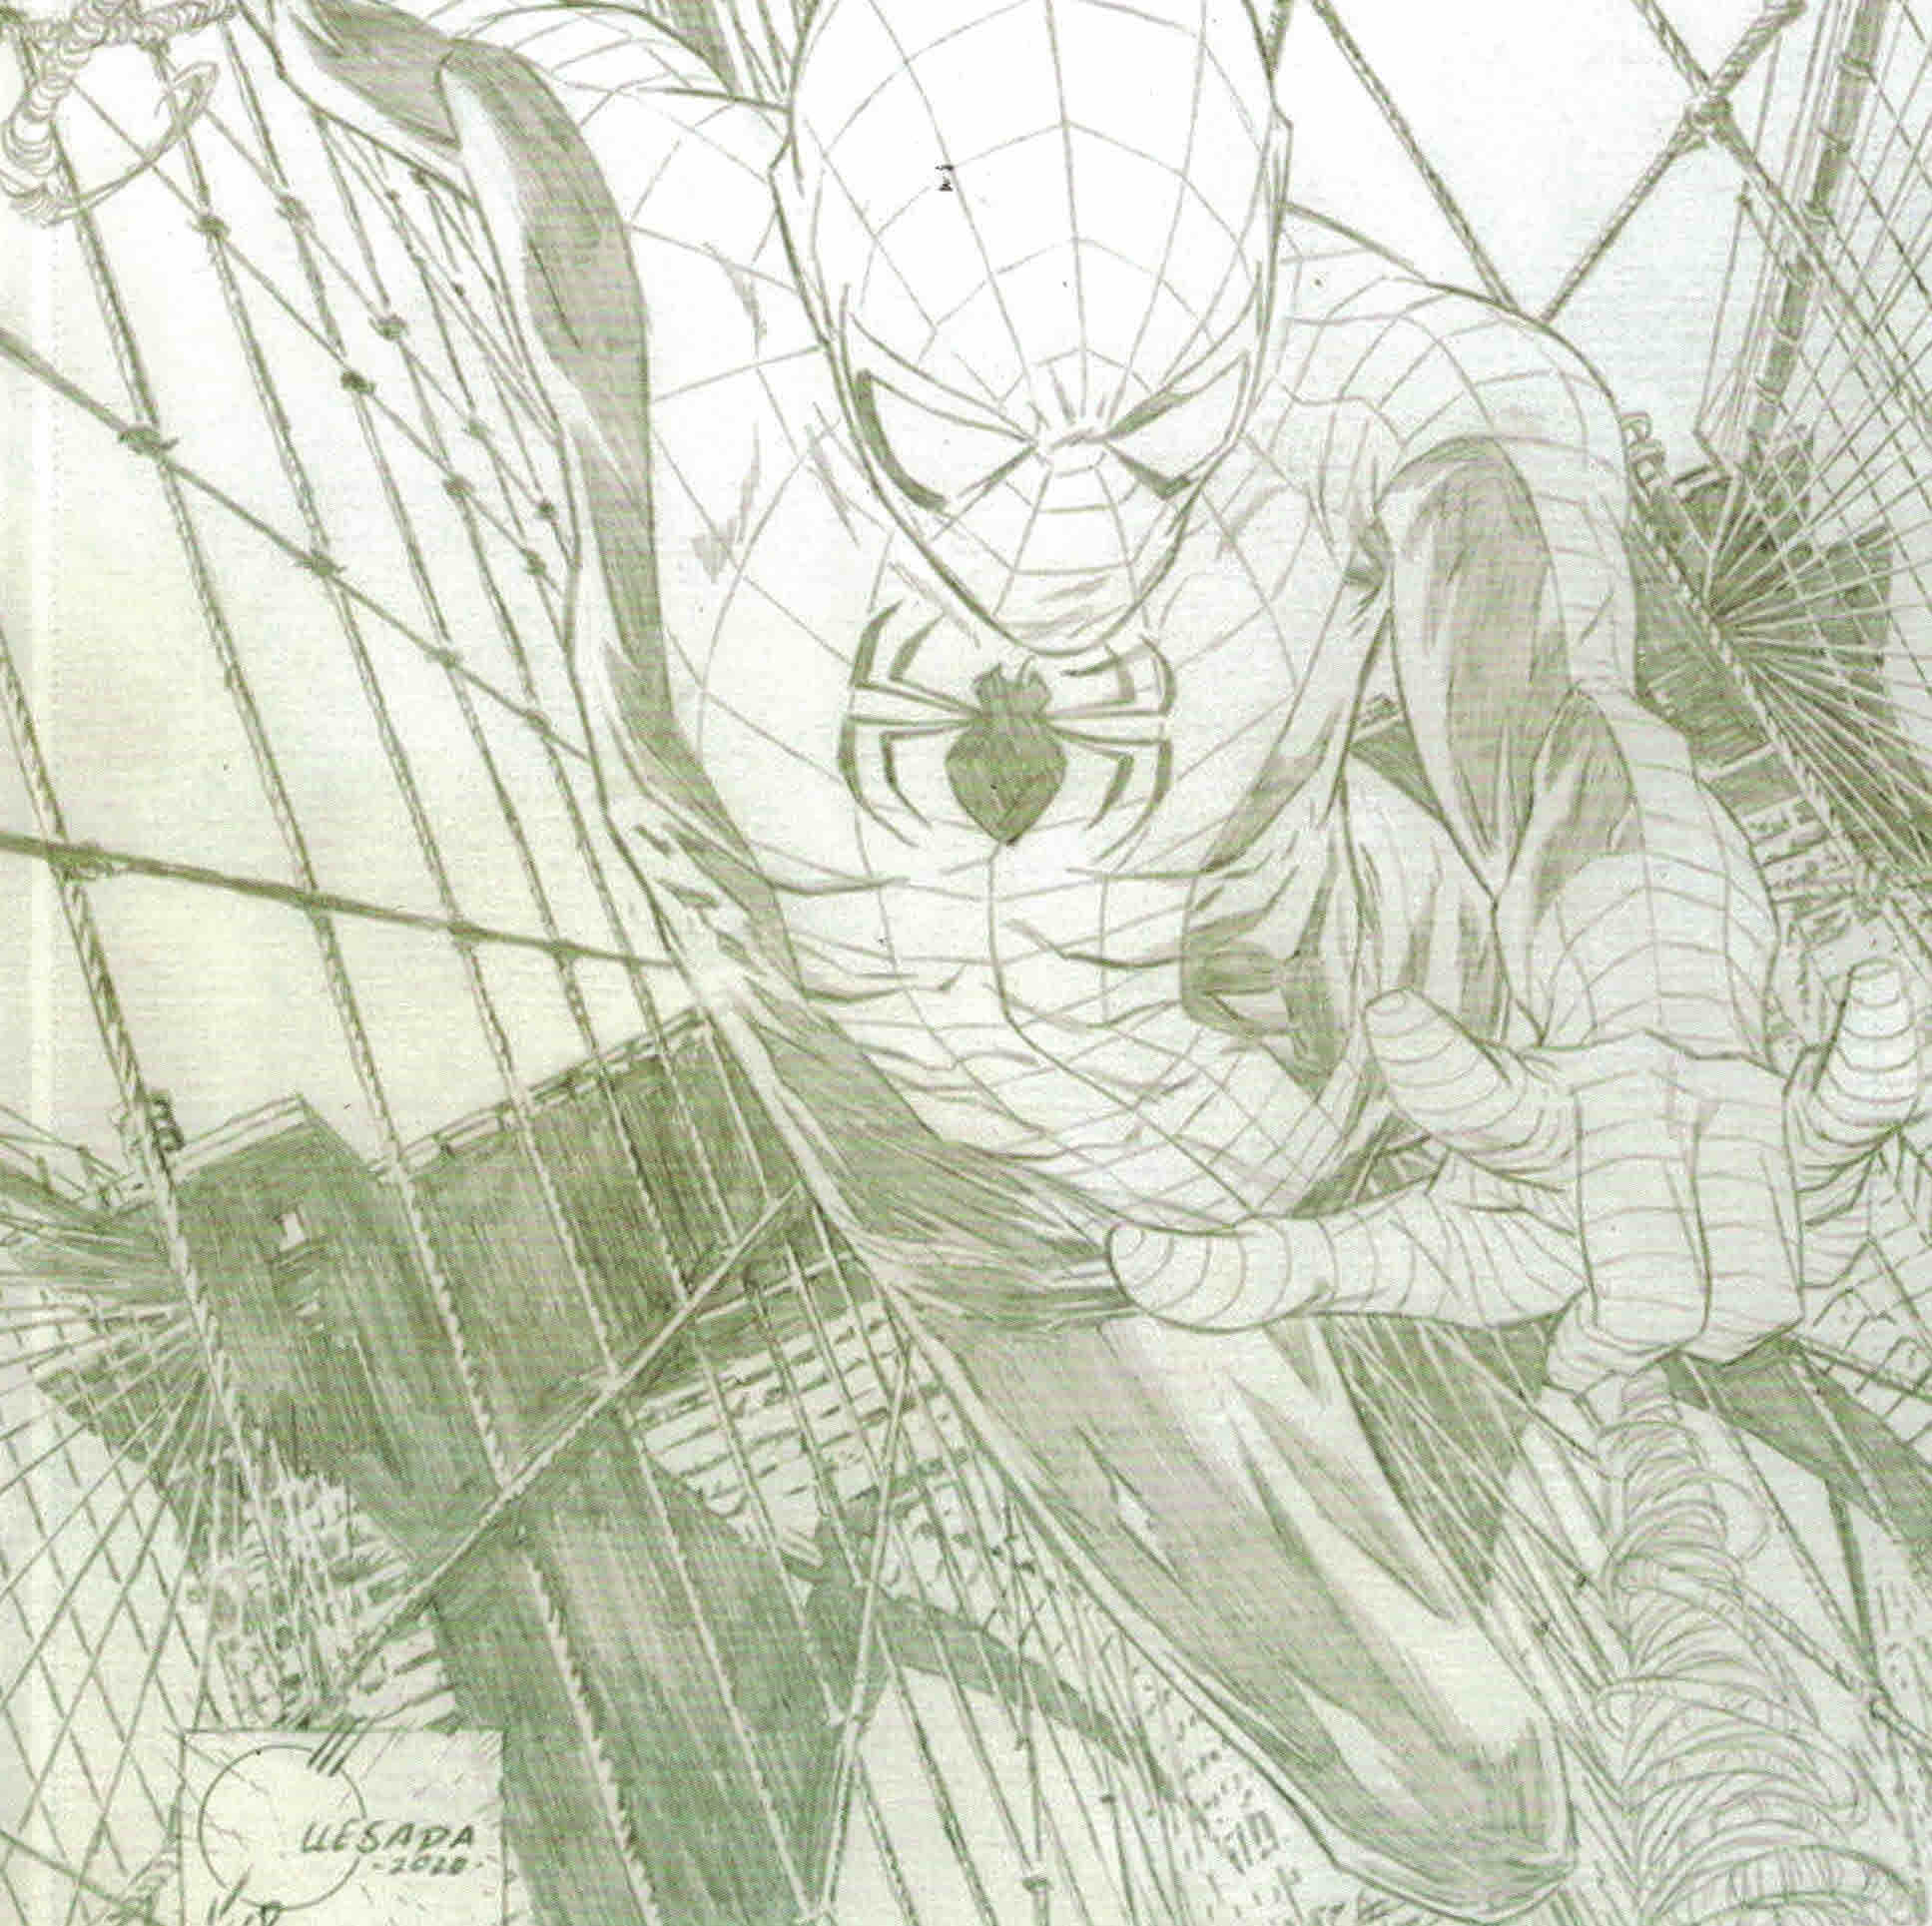 Joe Quesada 'Amazing Spider-Man' #850 gets NFT silent auction